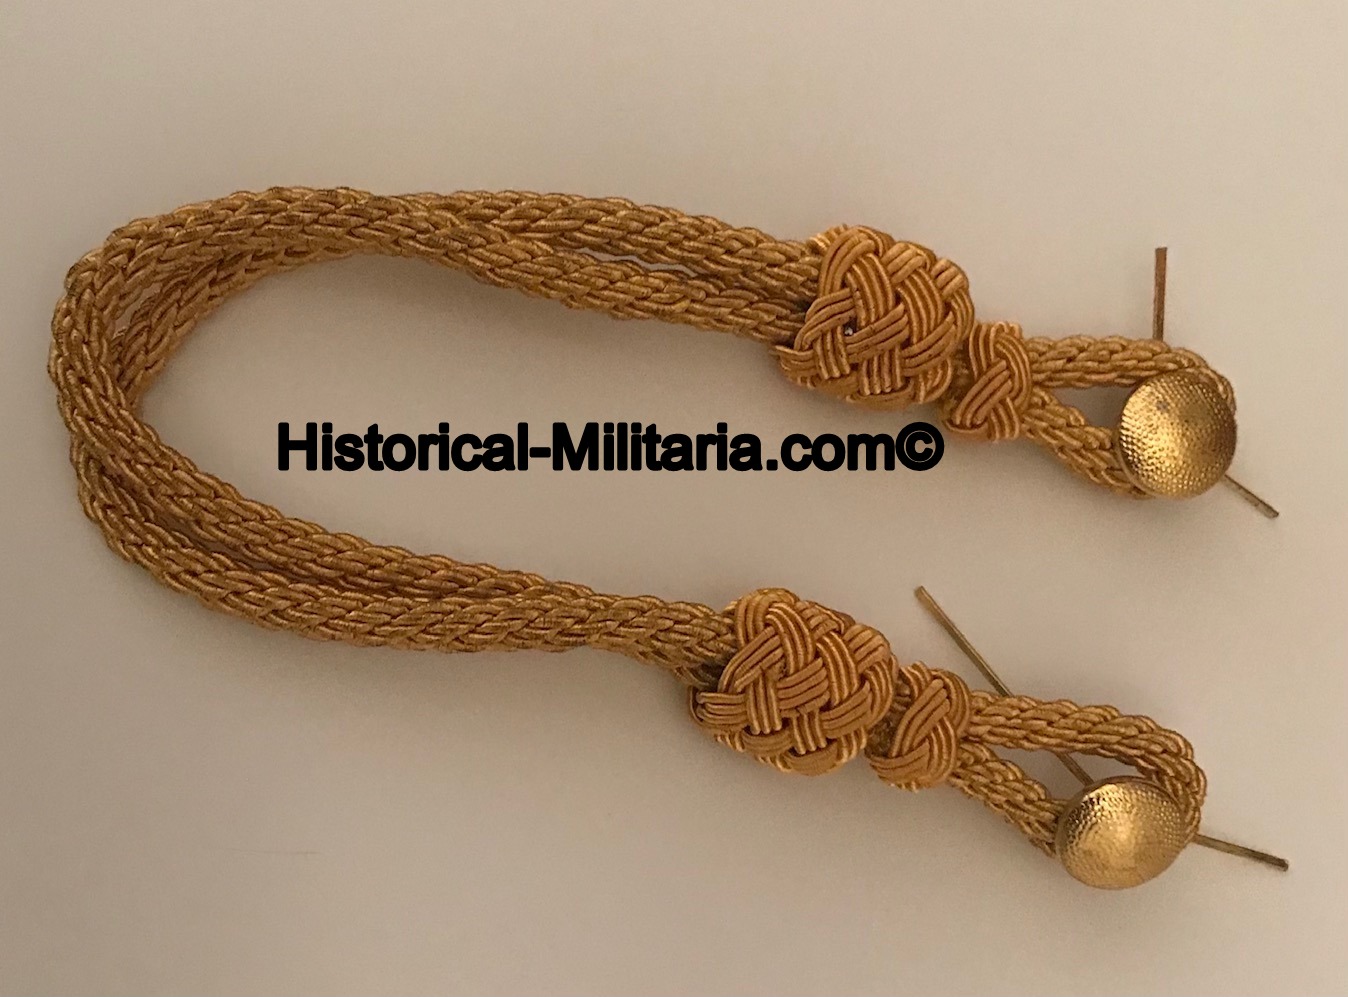 German General visor cap cord 6mm with buttons - Schirmmütze Mützenkordel General mit gekörnten Knöpfen - Doppia Cordellina per il berretto a visiera per un Generale con 2 bottoni